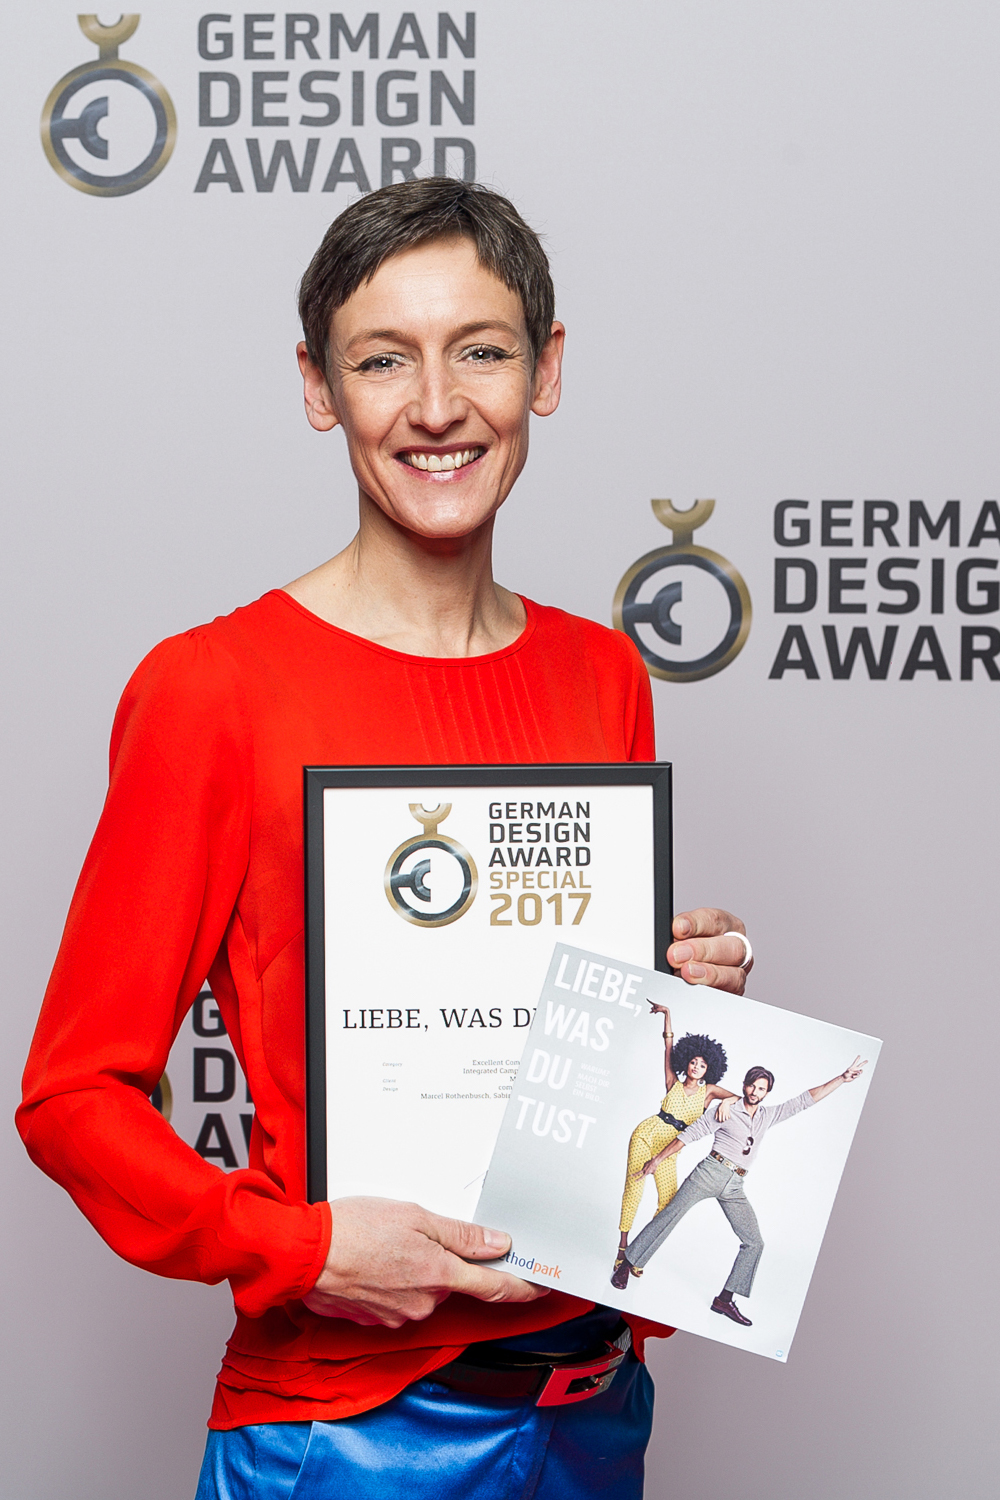 Sabine Fuchs, German Brand Award, Empolyer Branding, method park